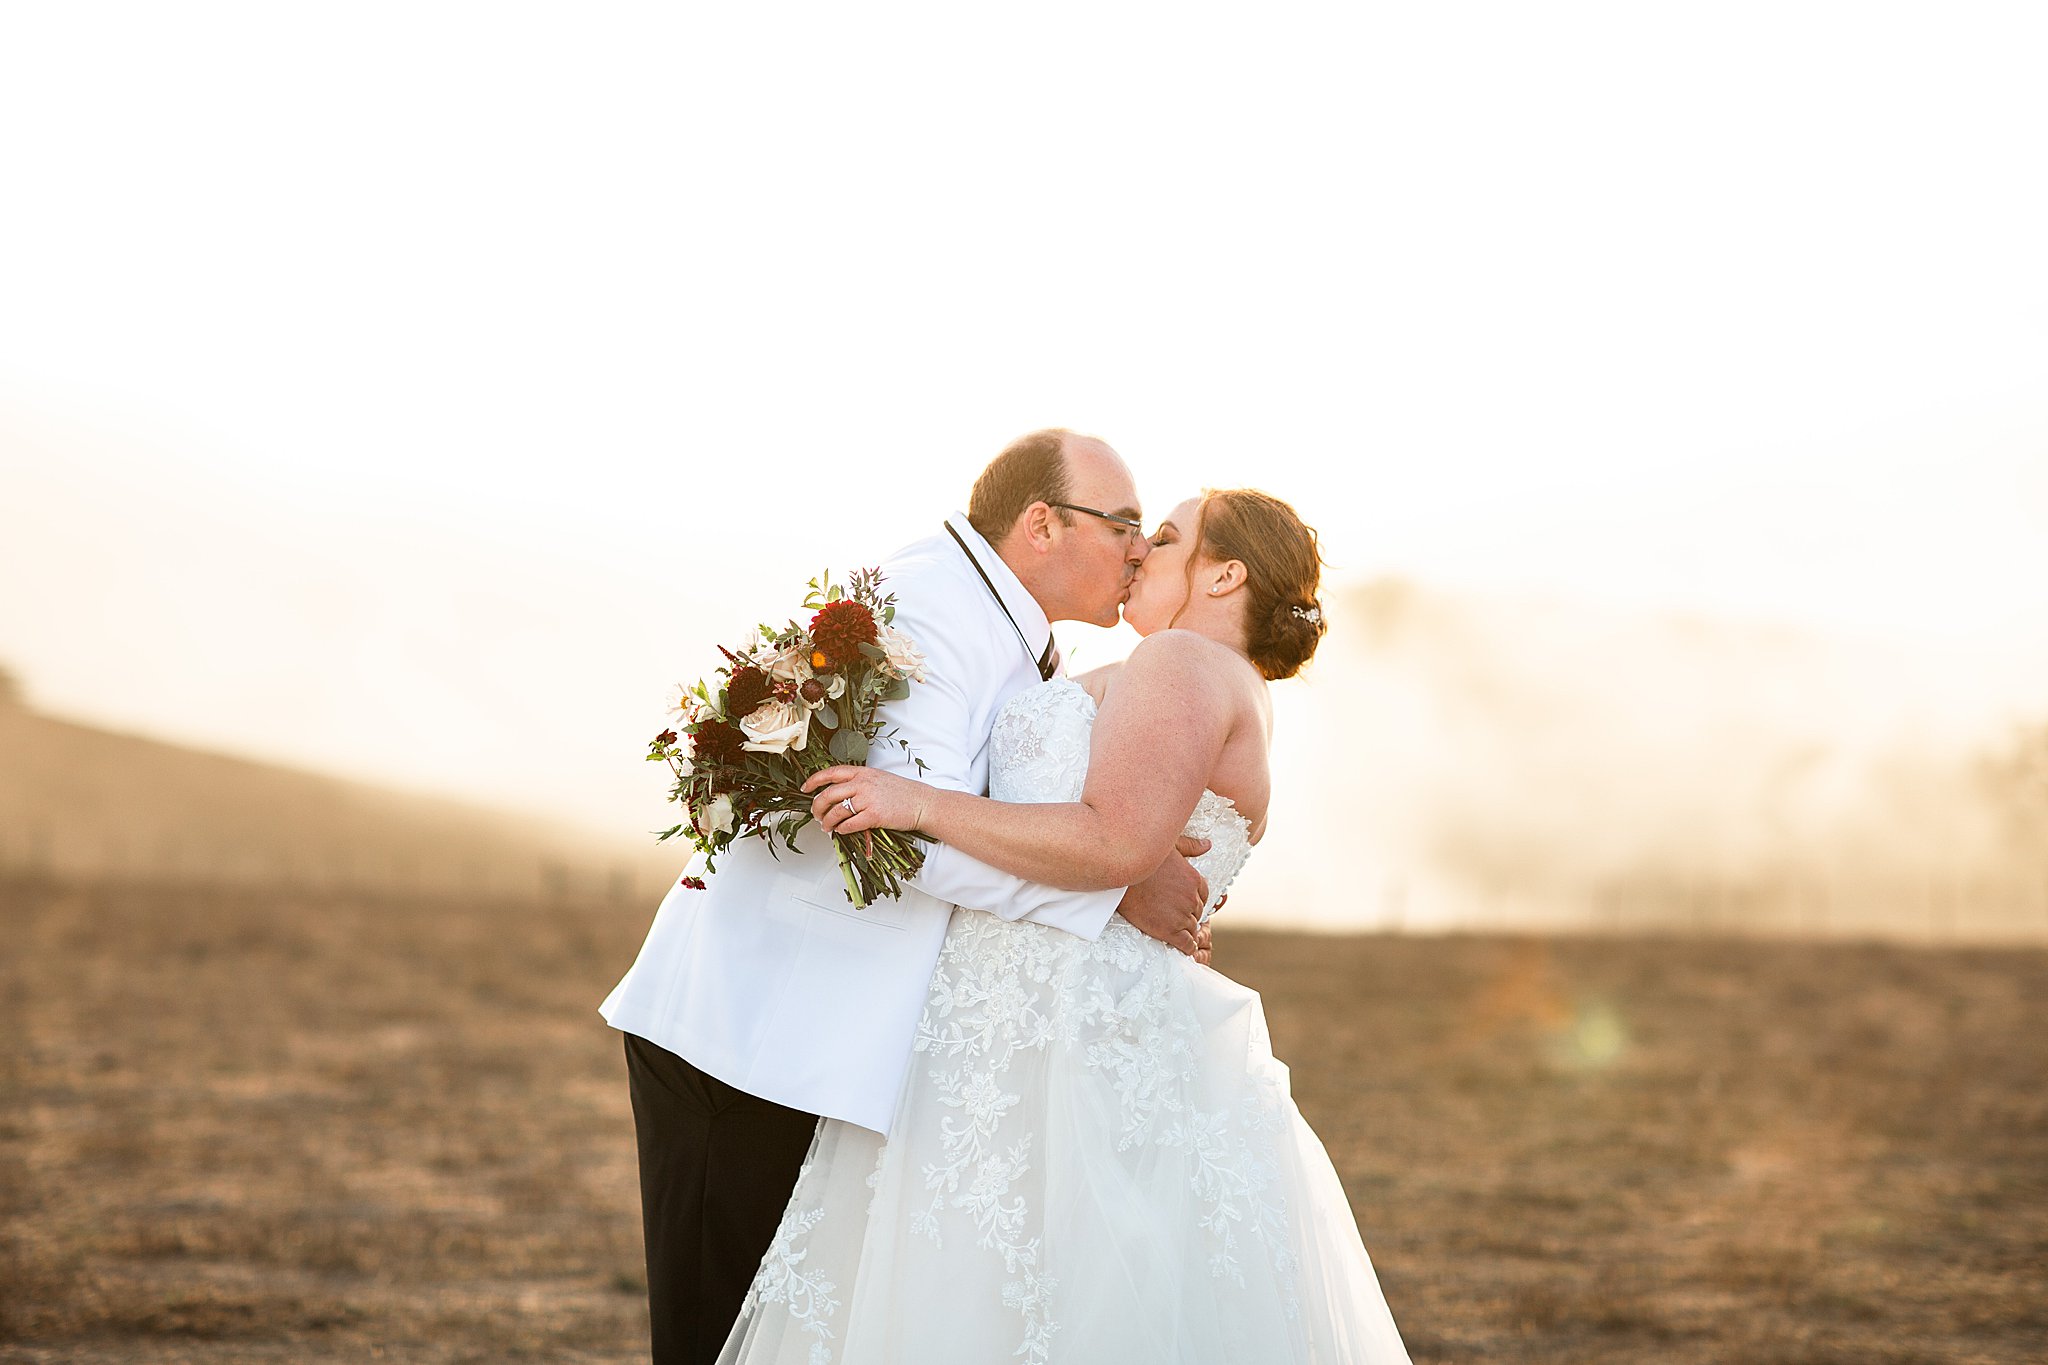 Bride and groom wedding portraits by Amy Jordan Photography Petaluma California